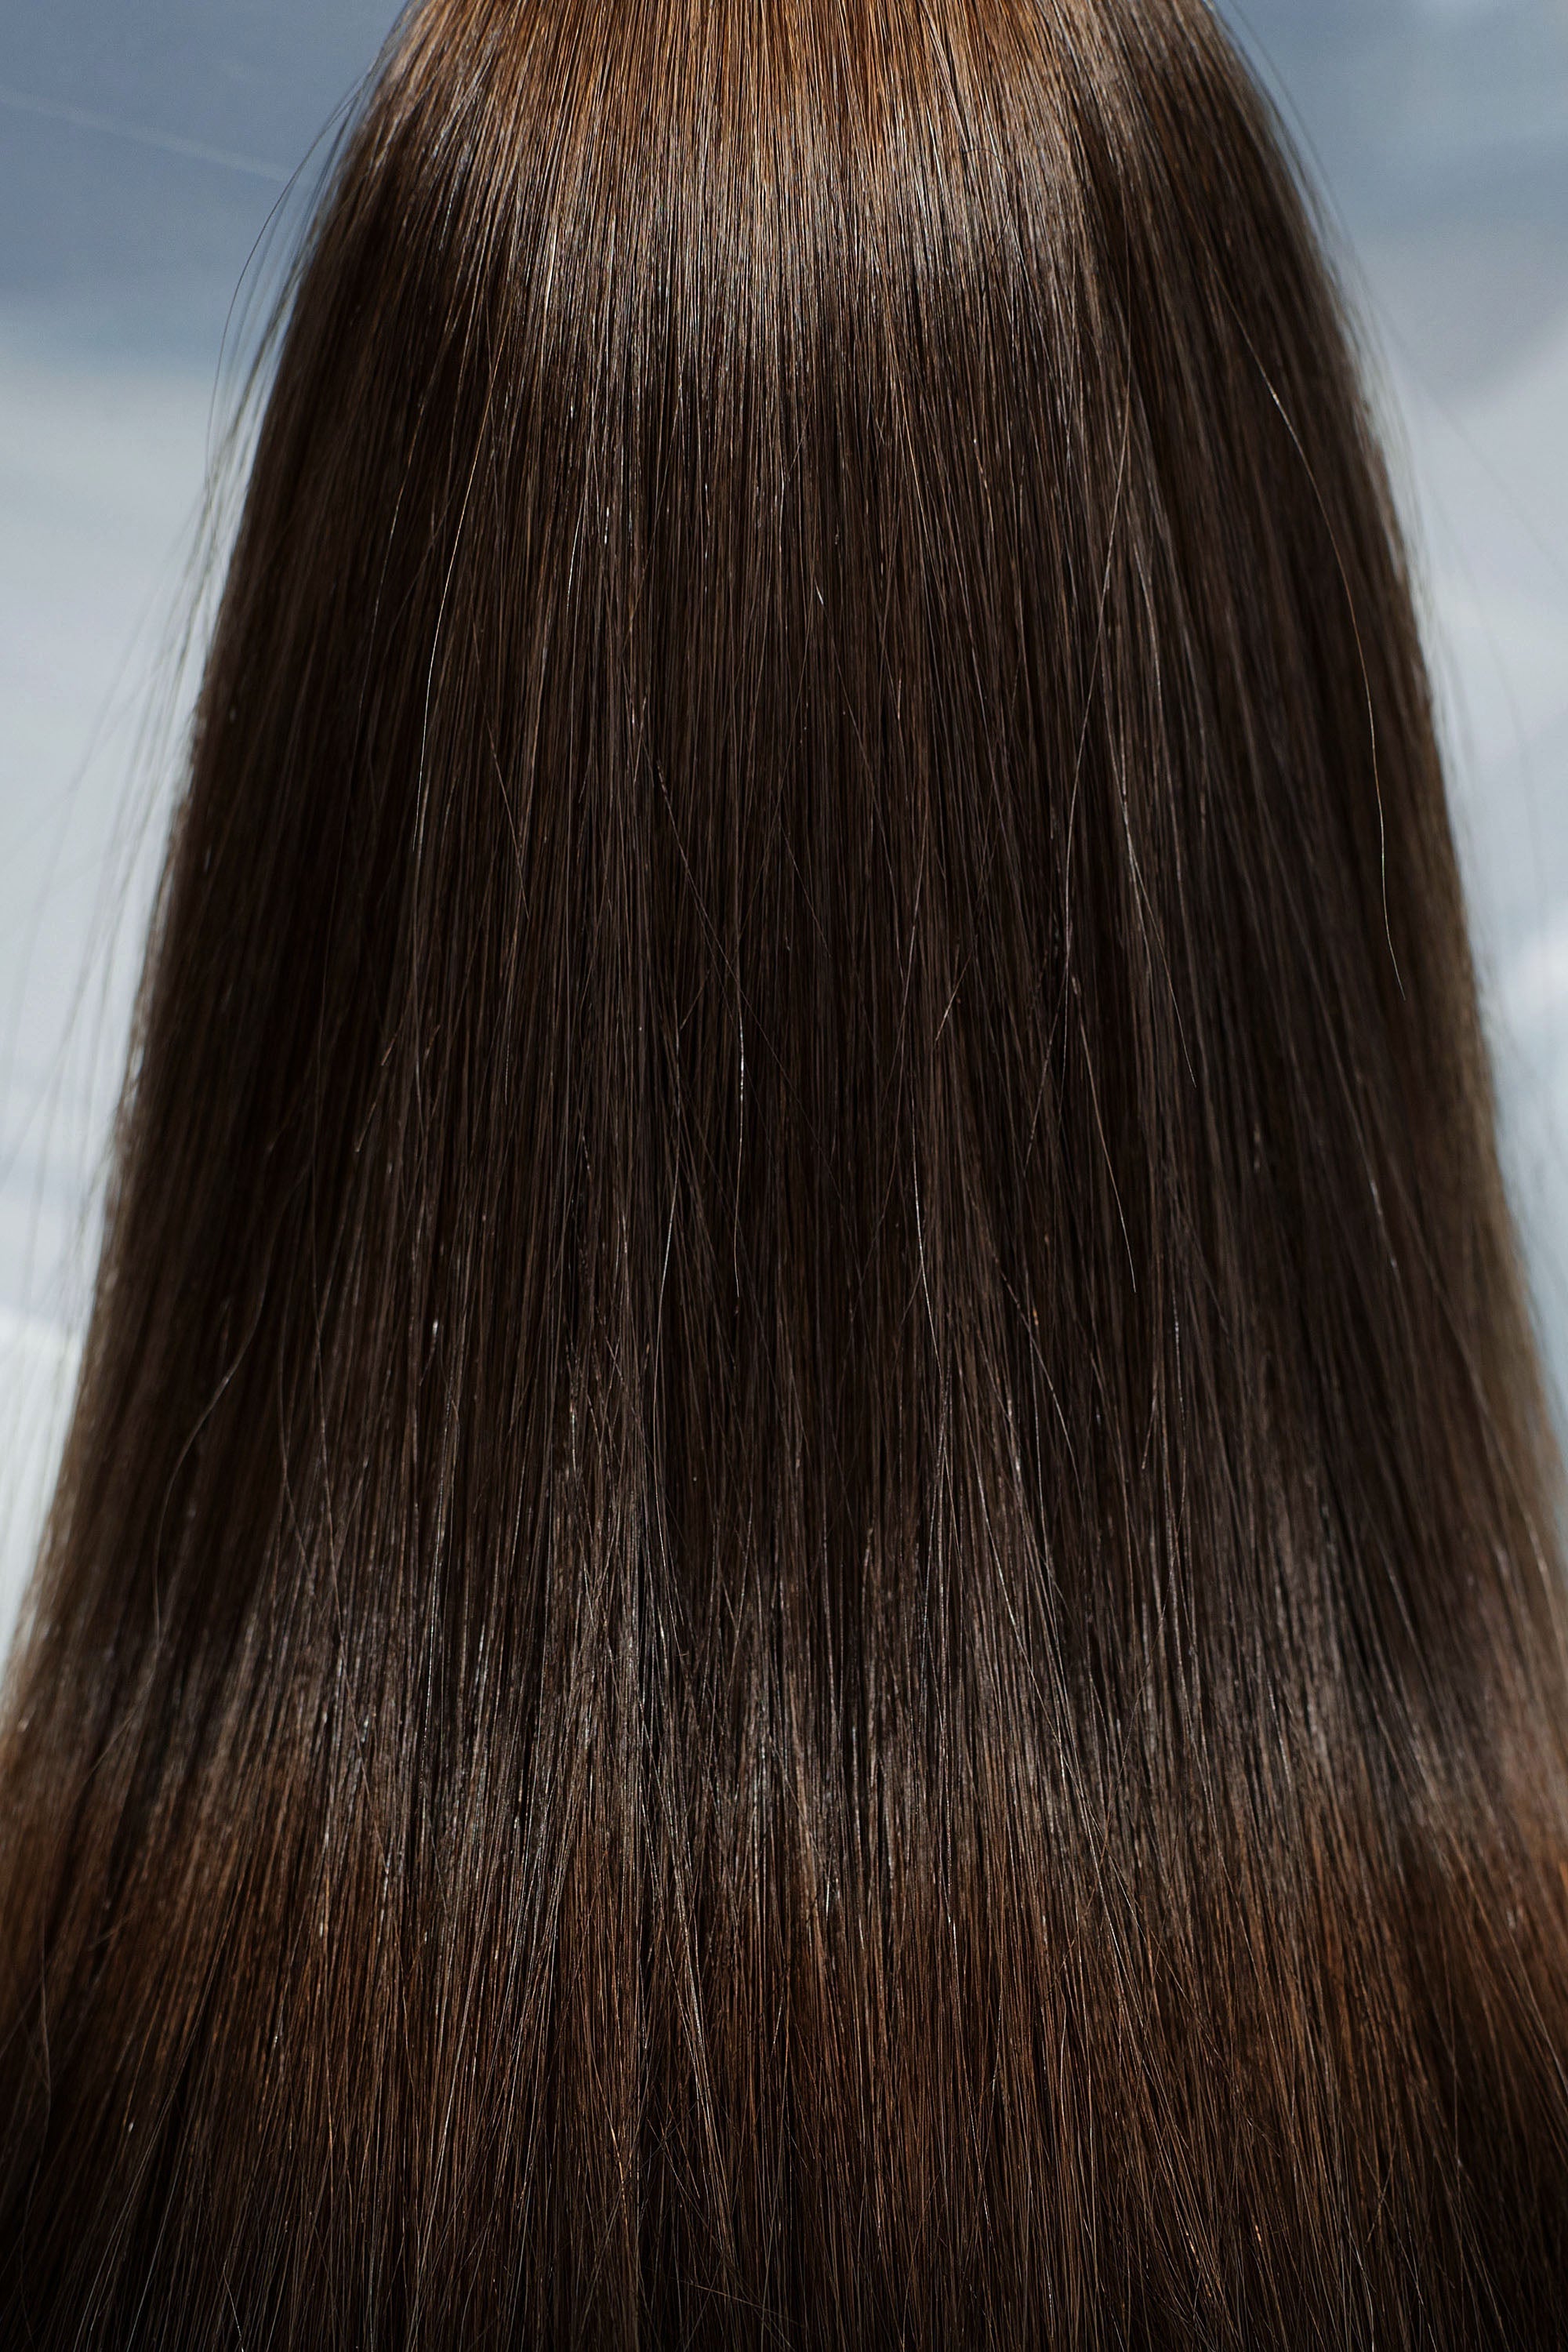 Behair professional Keratin Tip "Premium" 22" (55cm) Natural Straight Light Brown #4 - 25g (Micro - 0.5g each pcs) hair extensions